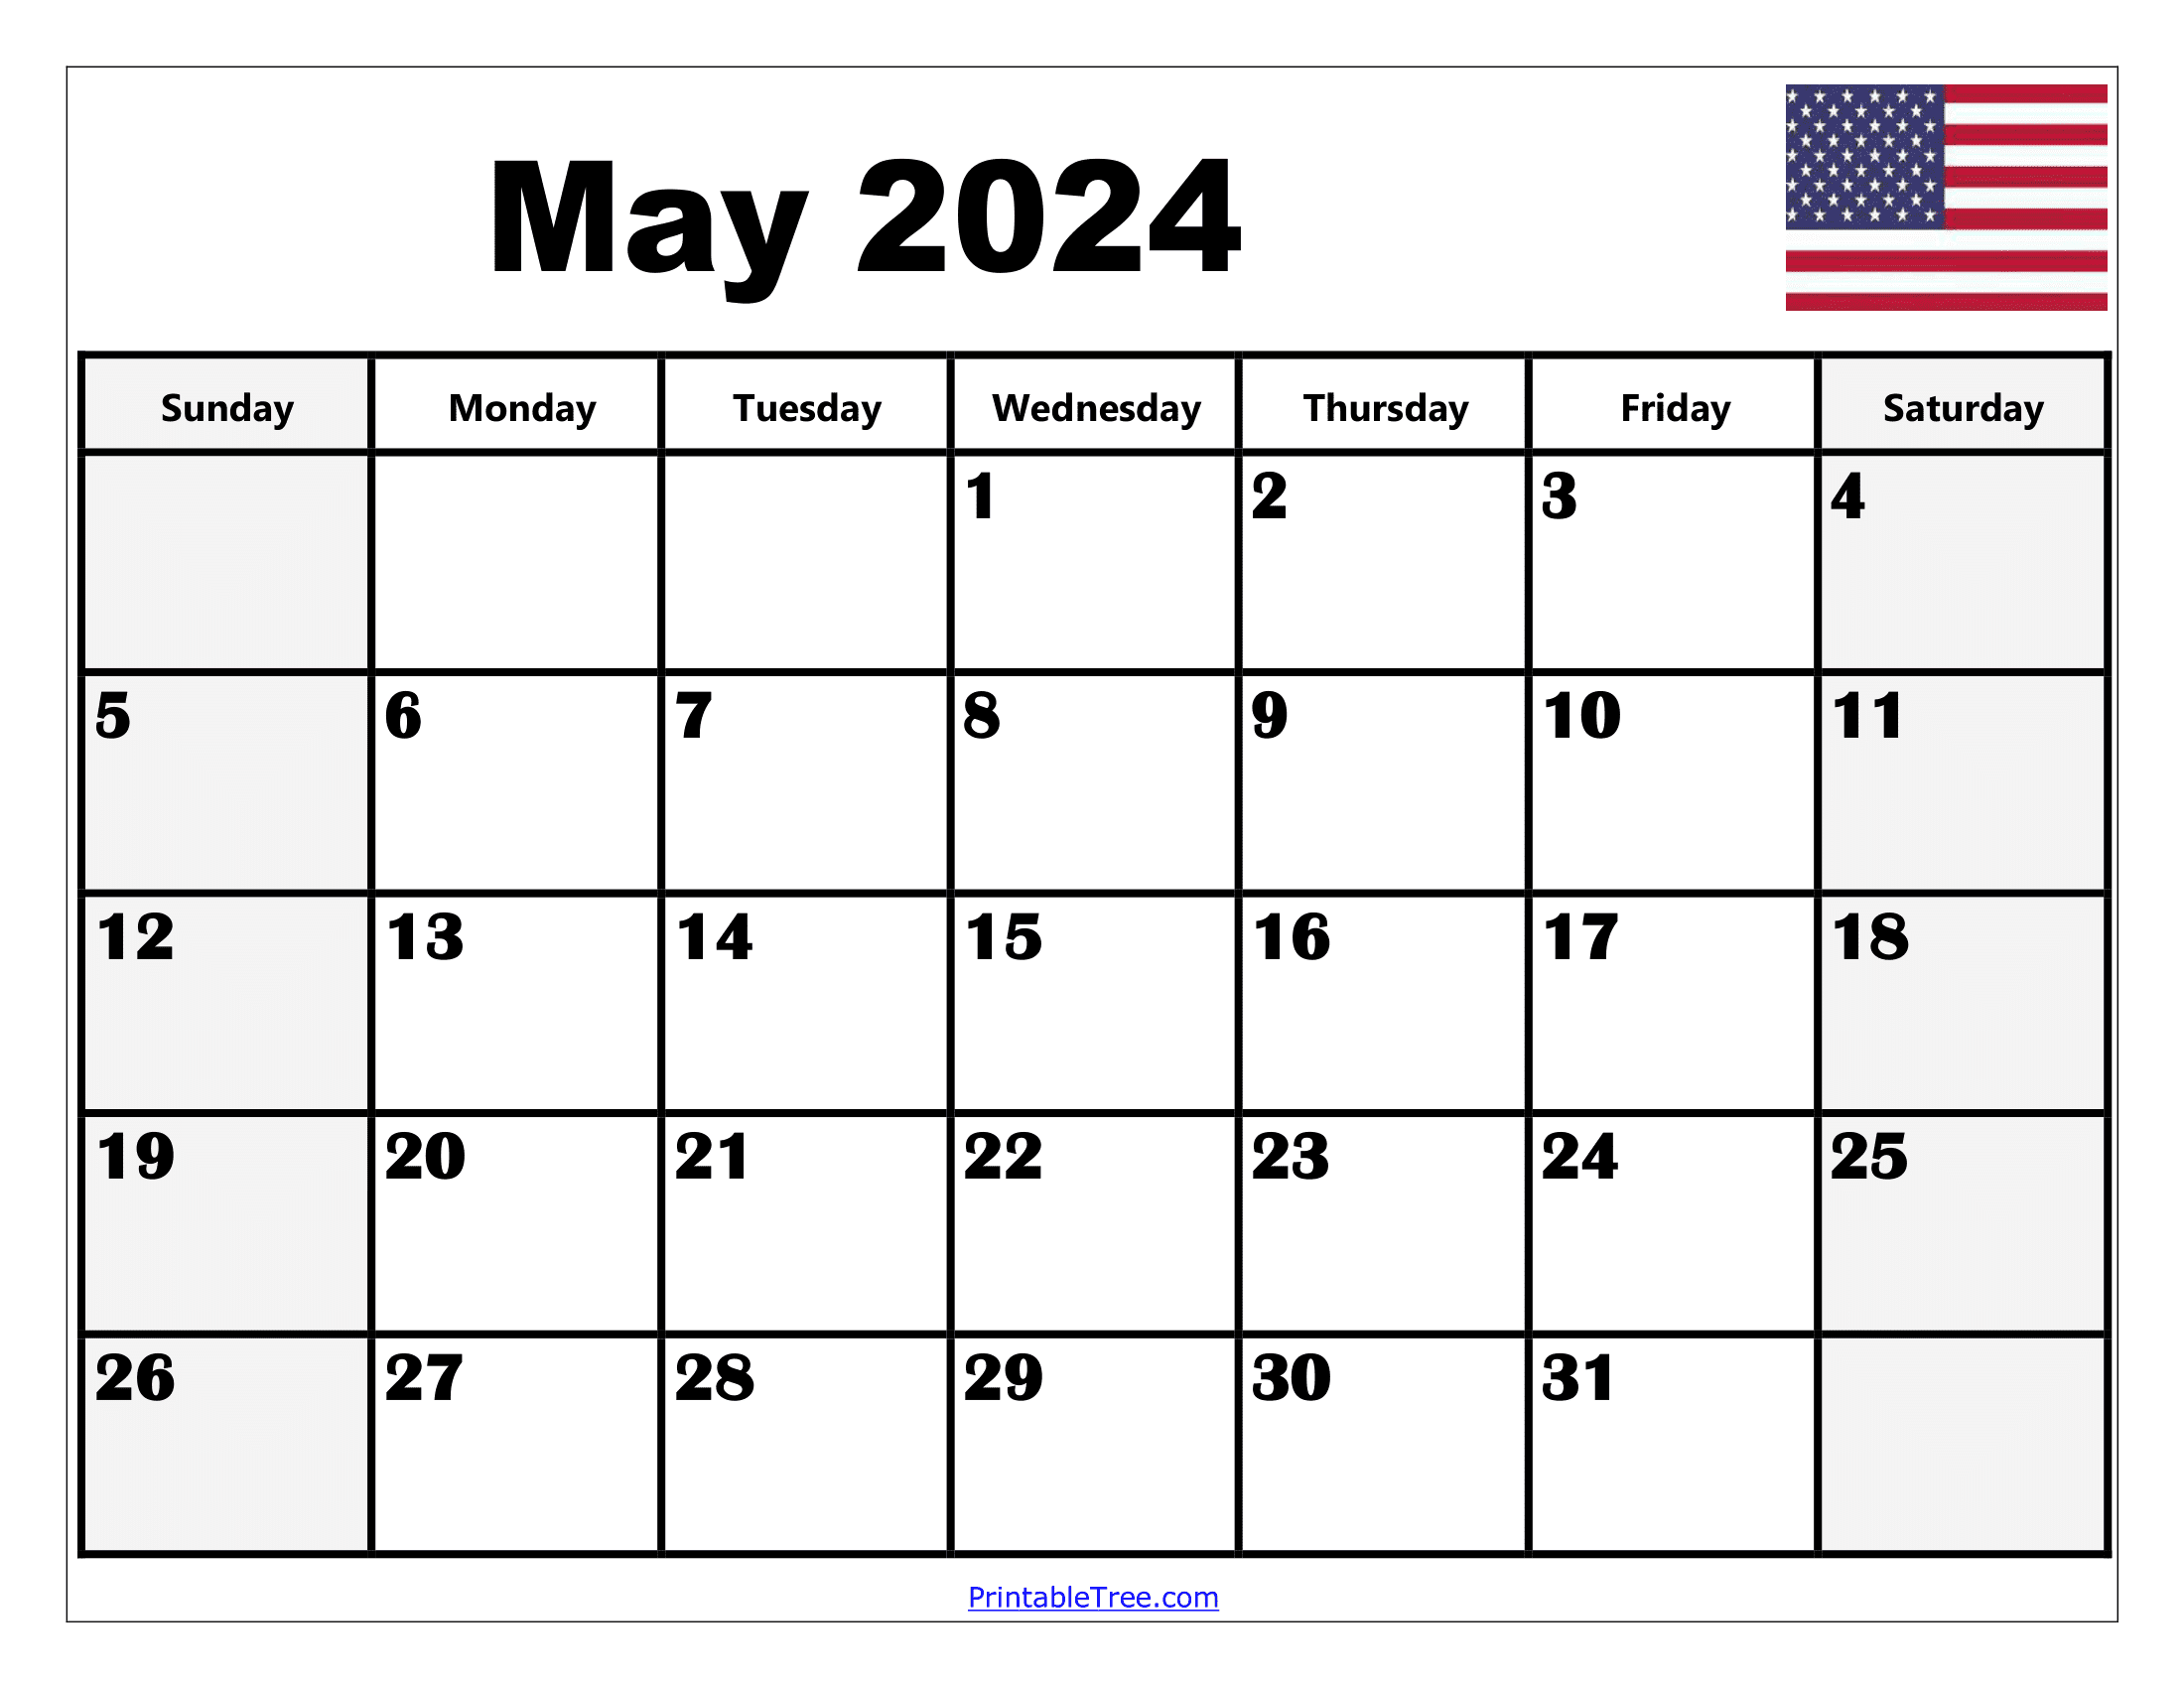 Blank May 2024 Calendar Printable Pdf Templates With Holidays for May 2024 Calendar Printable With Holidays